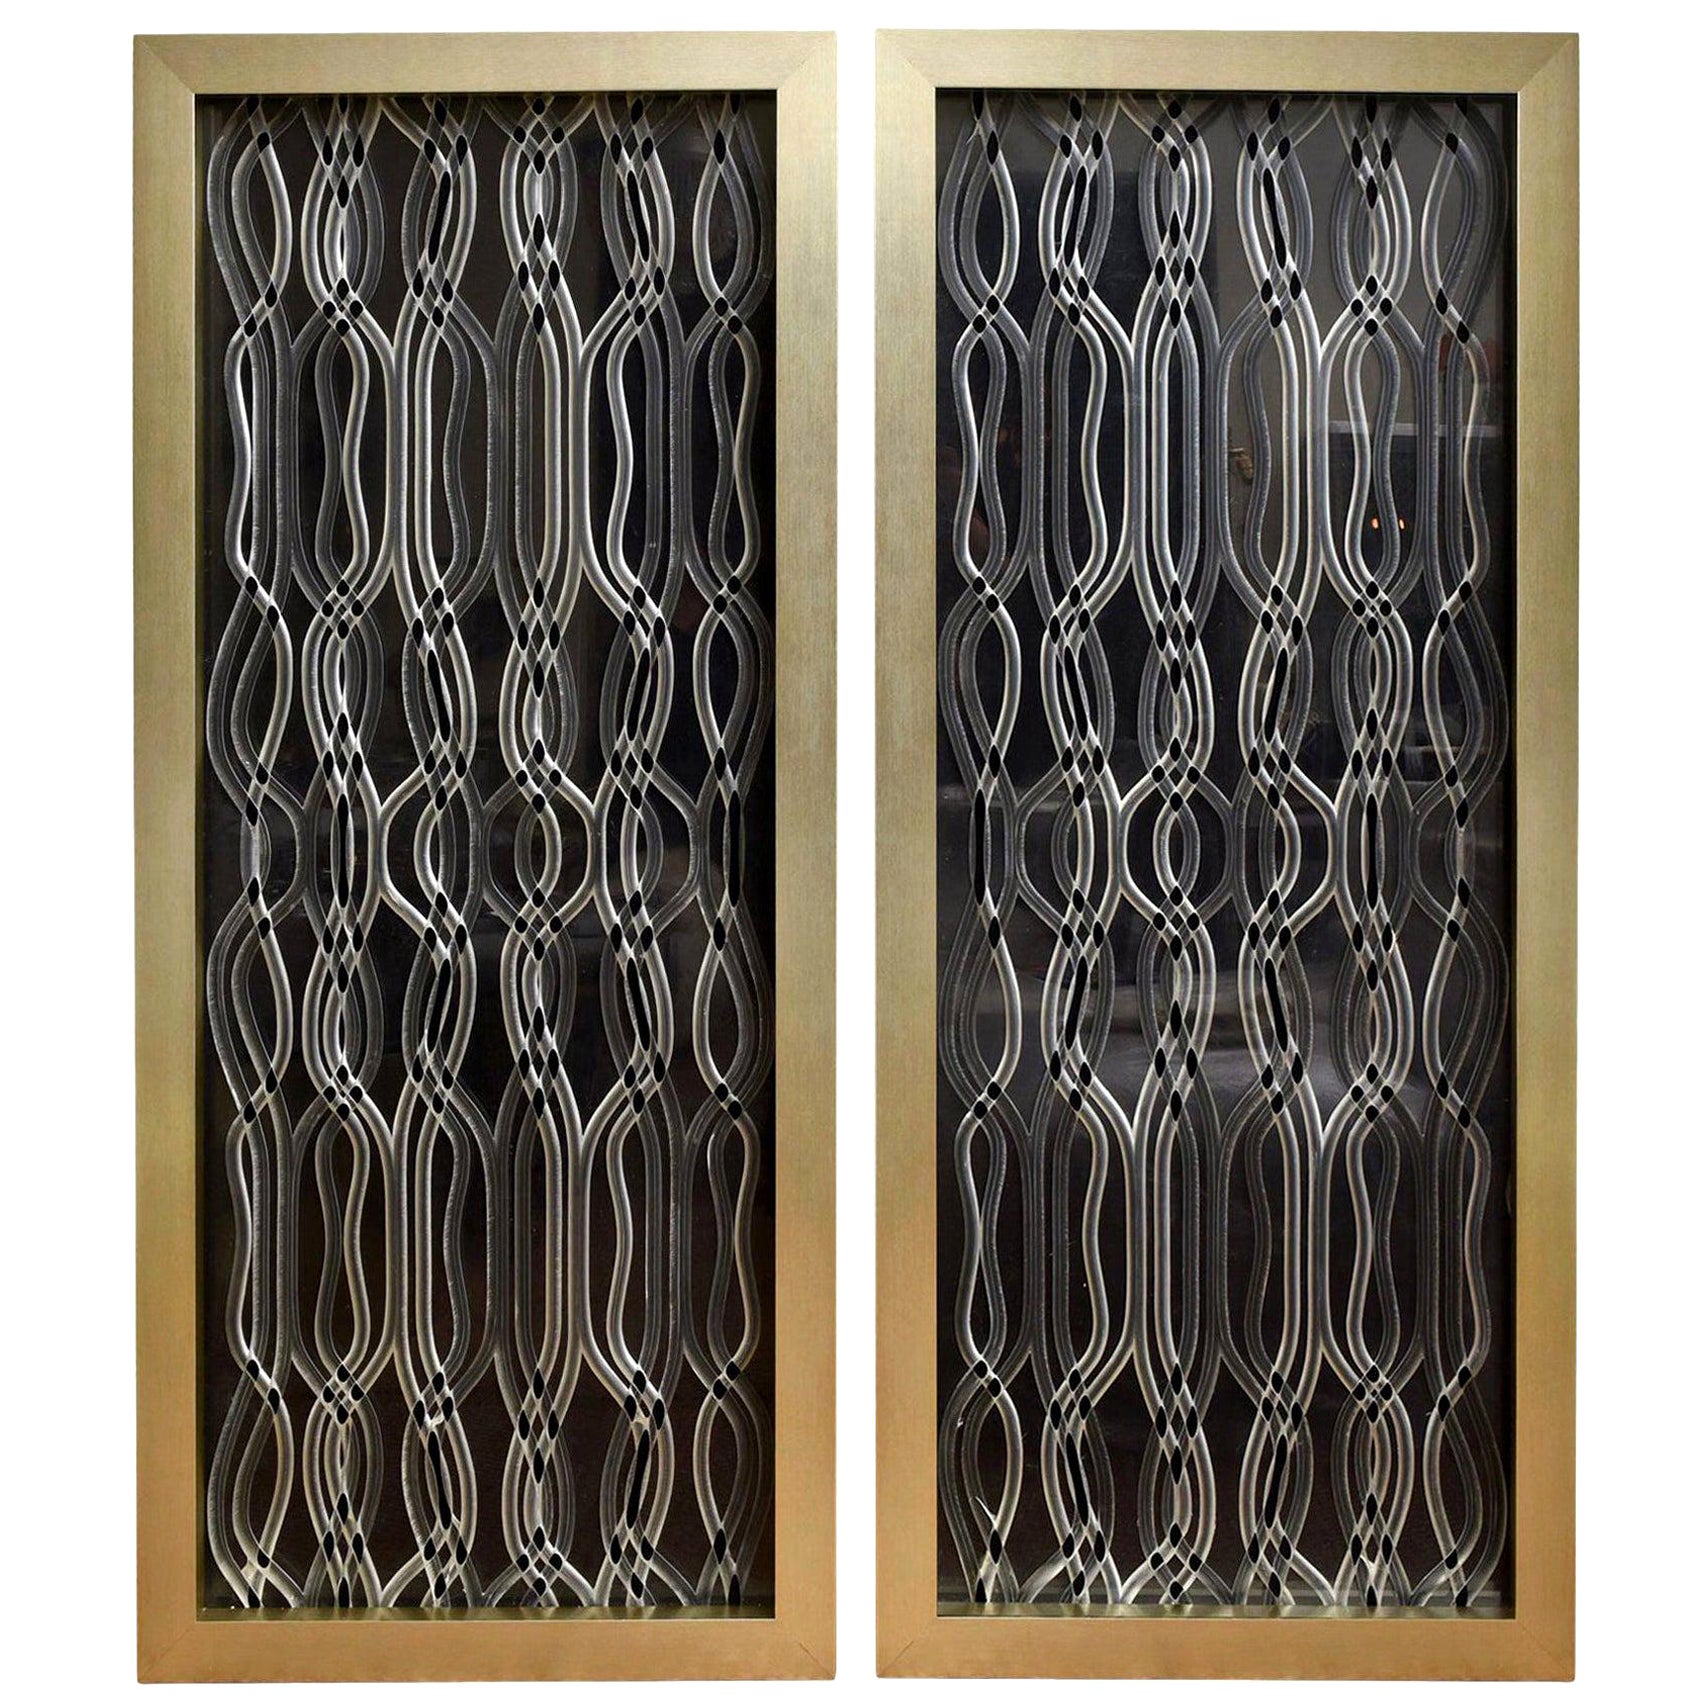 Lucite Dimensional Racetrack Sculptural Panels Custom Framed Pair of Vintage